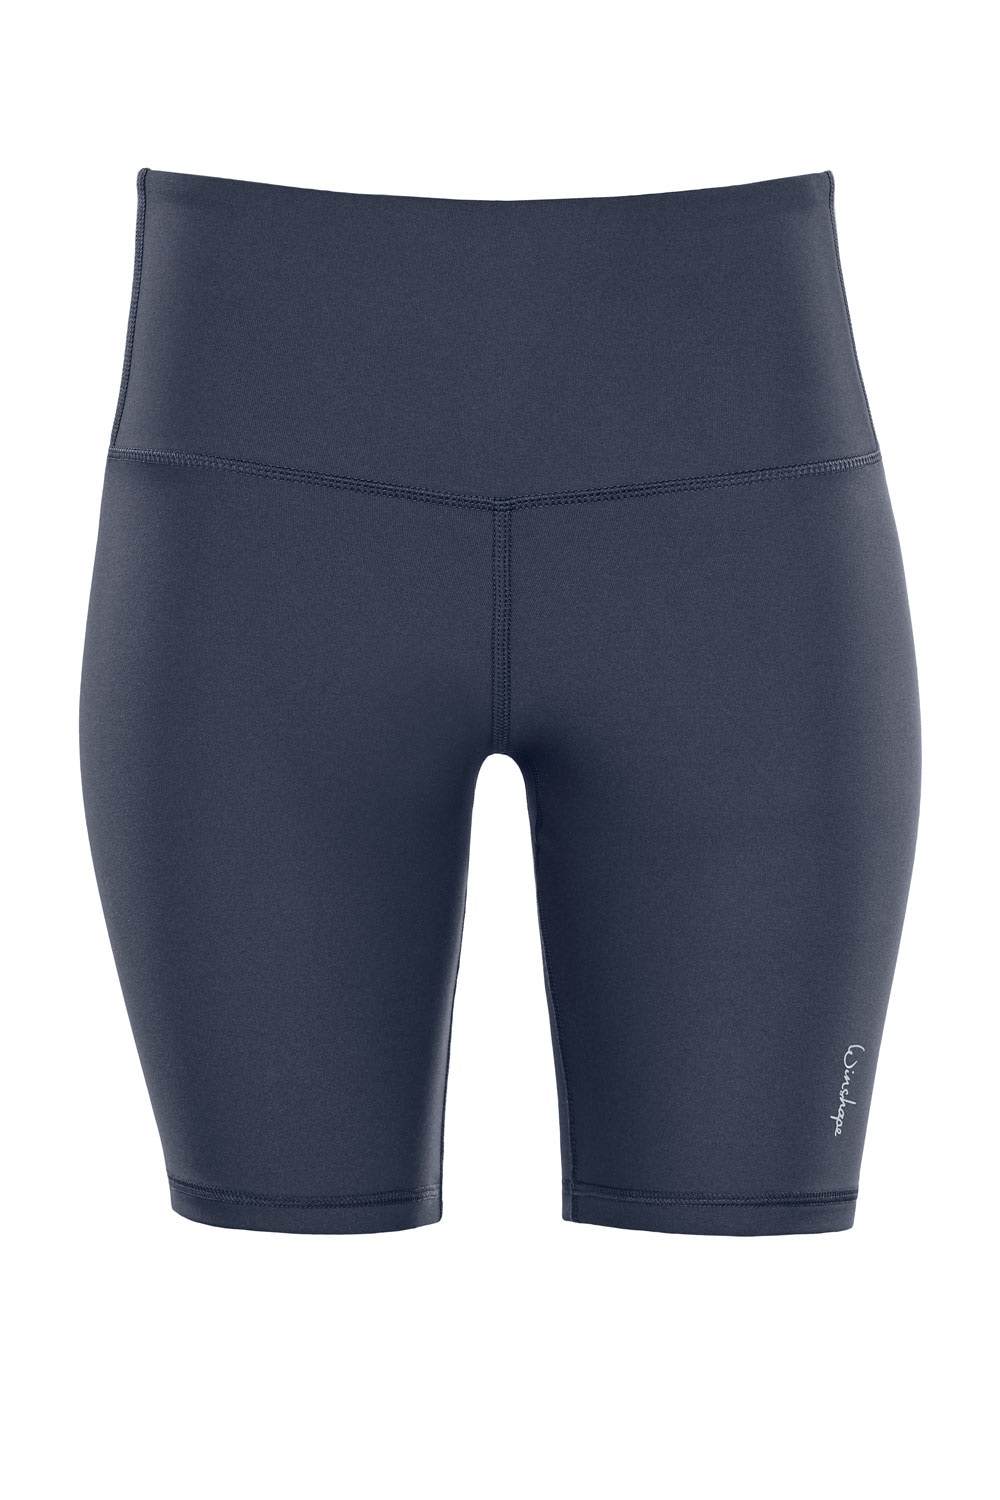 Winshape Shorts »Functional Comfort AEL412C« von Winshape